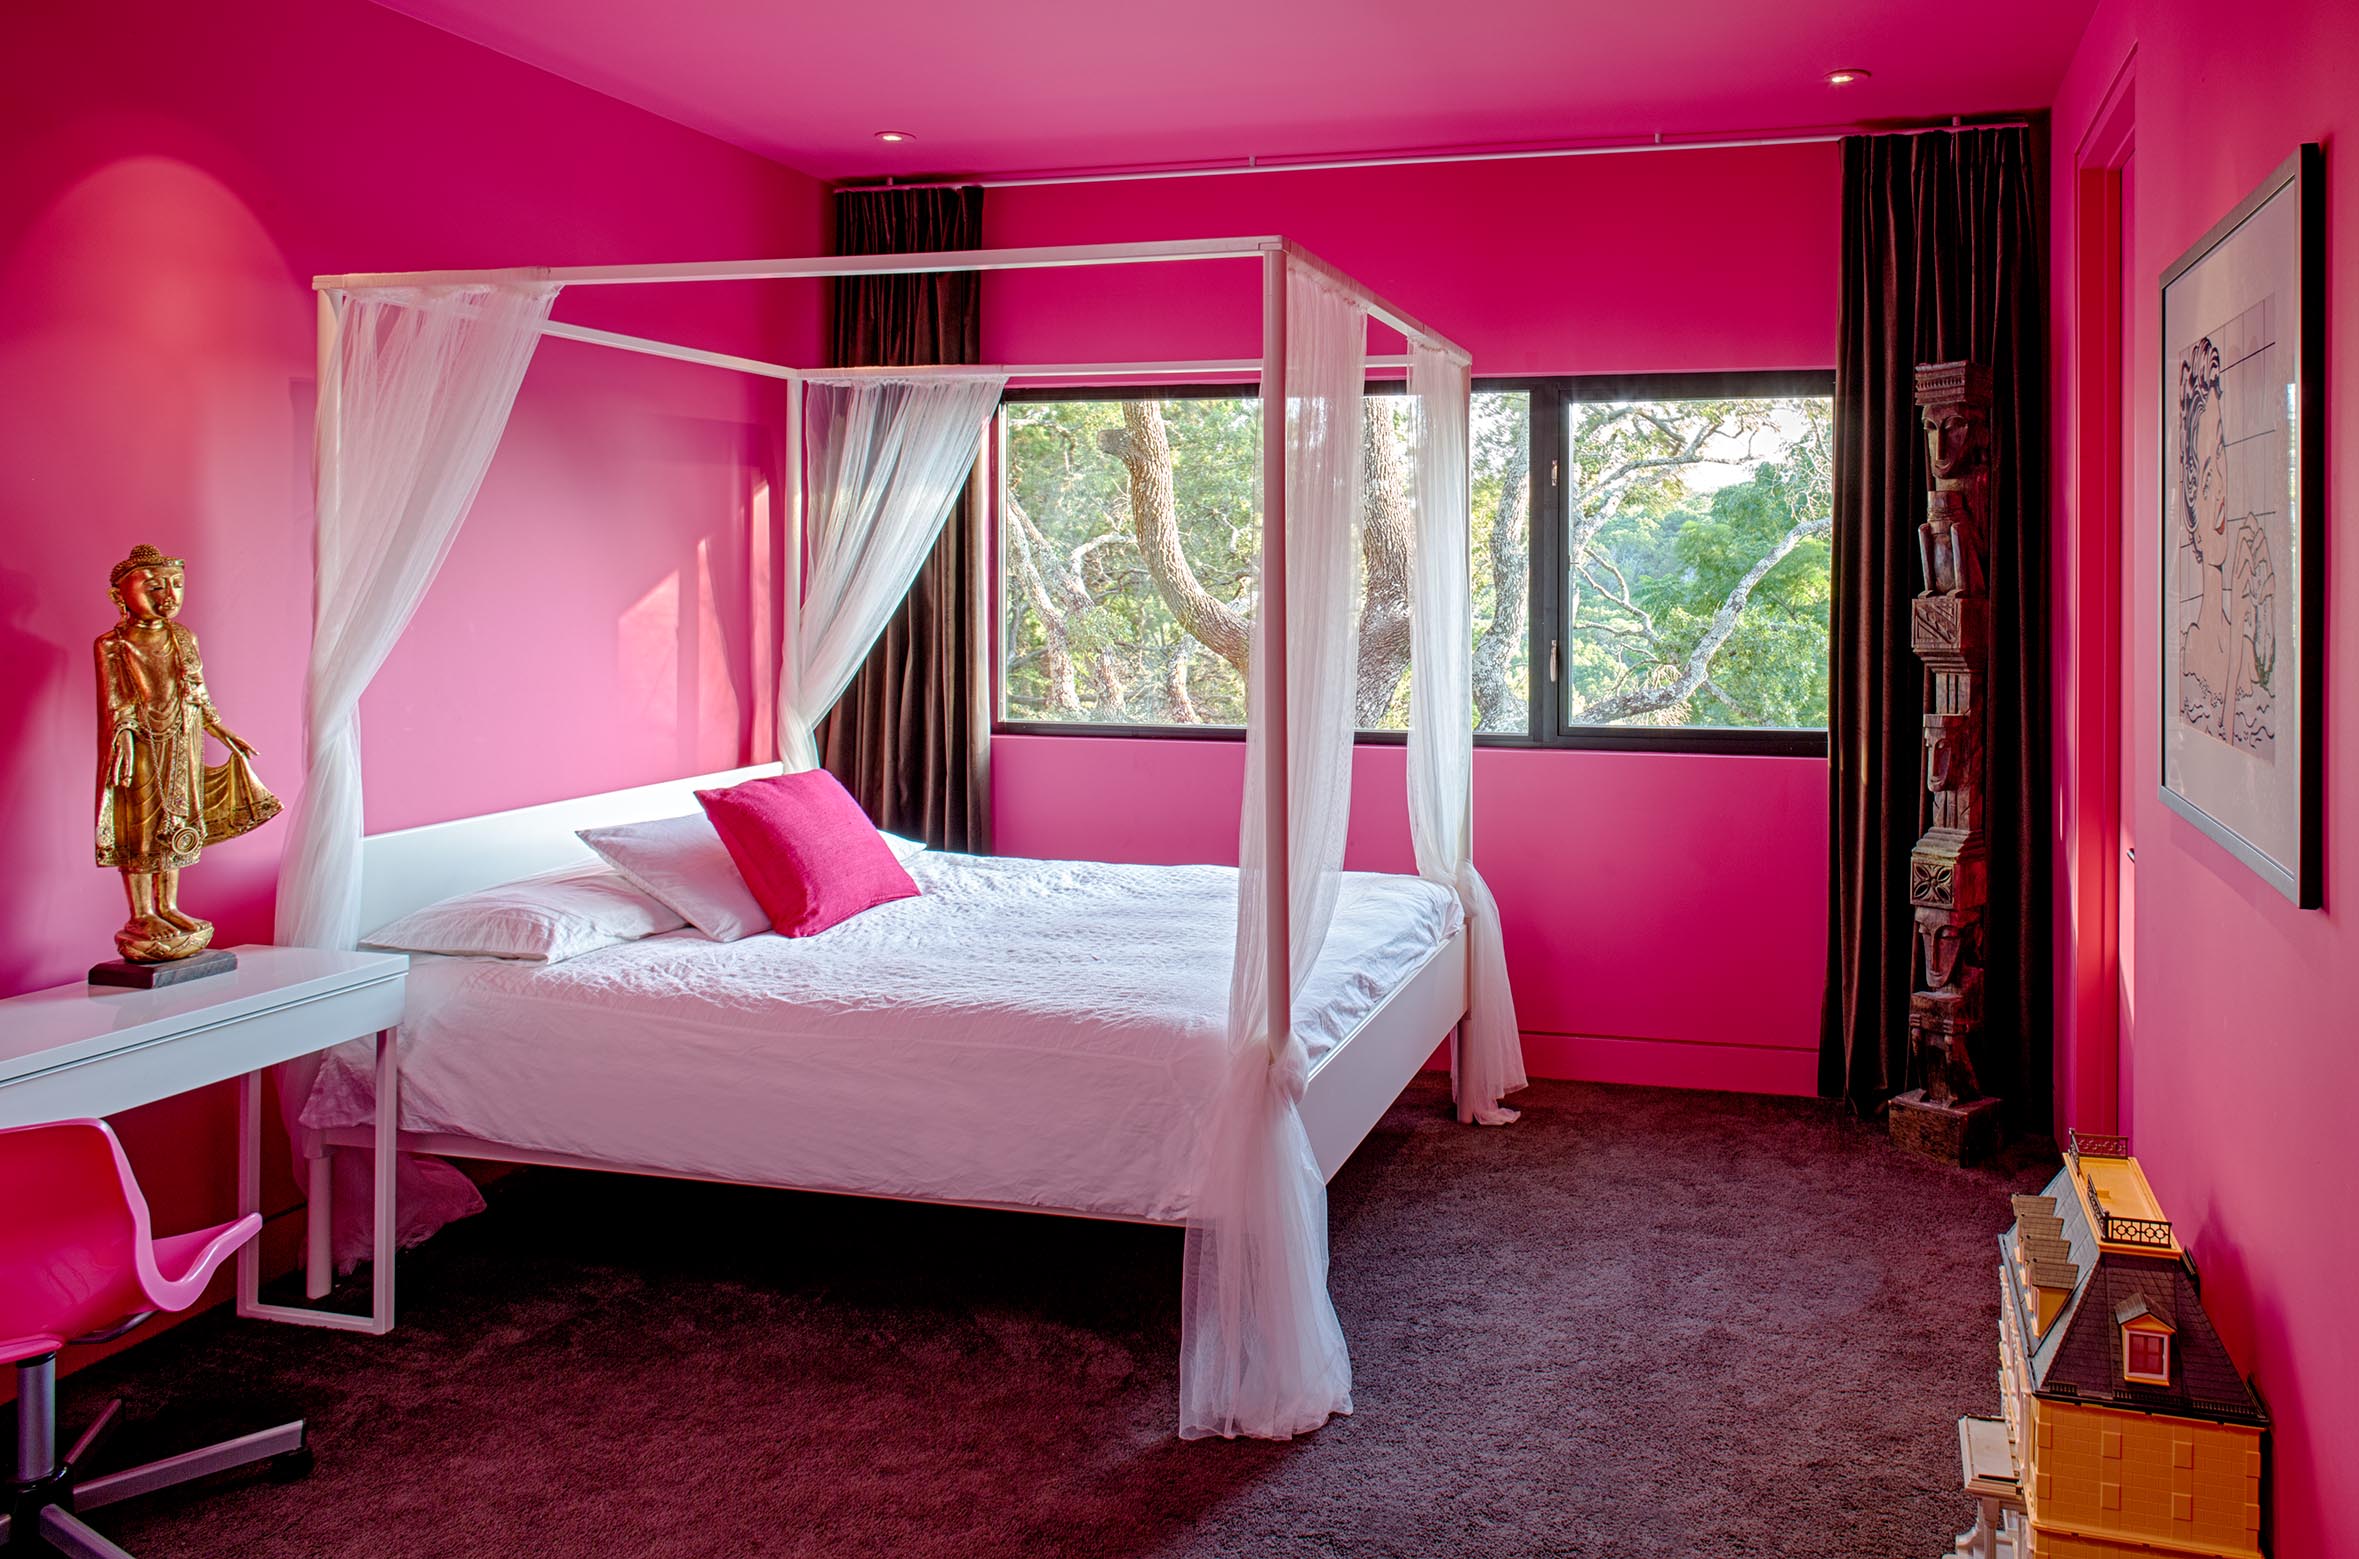 Комната красиво красивая недорого. Красивая комната. Спальня в розовом цвете. Комната в розовом цвете. Спальня в розовых тонах.